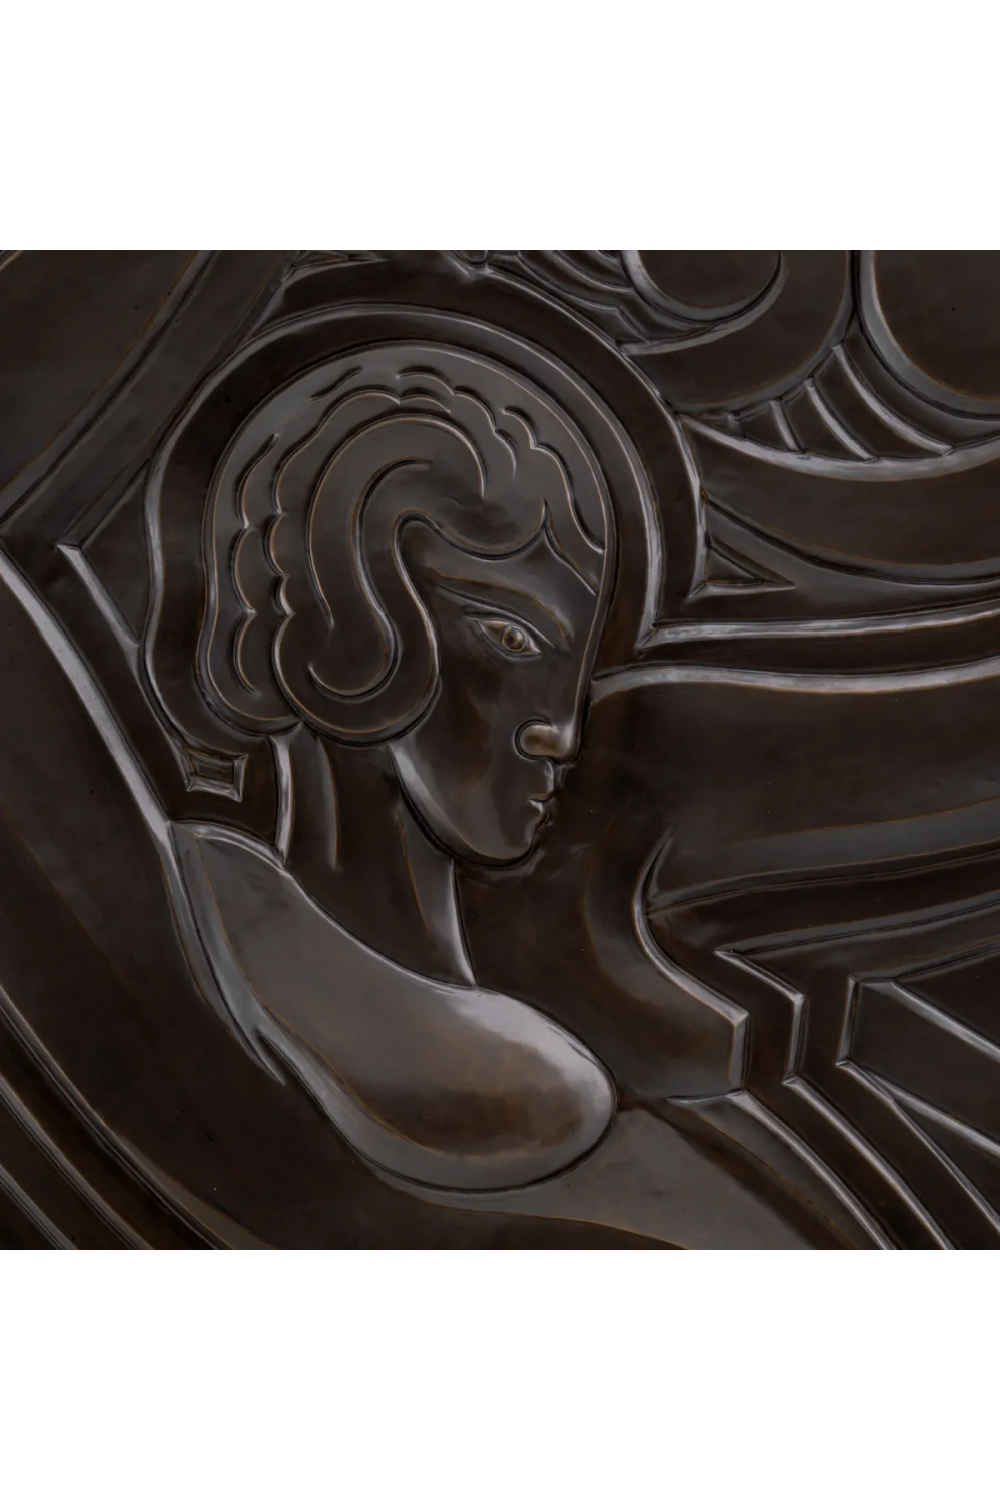 Bronze Carved Wall Object | Eichholtz Folies Bergere | Oroa.com